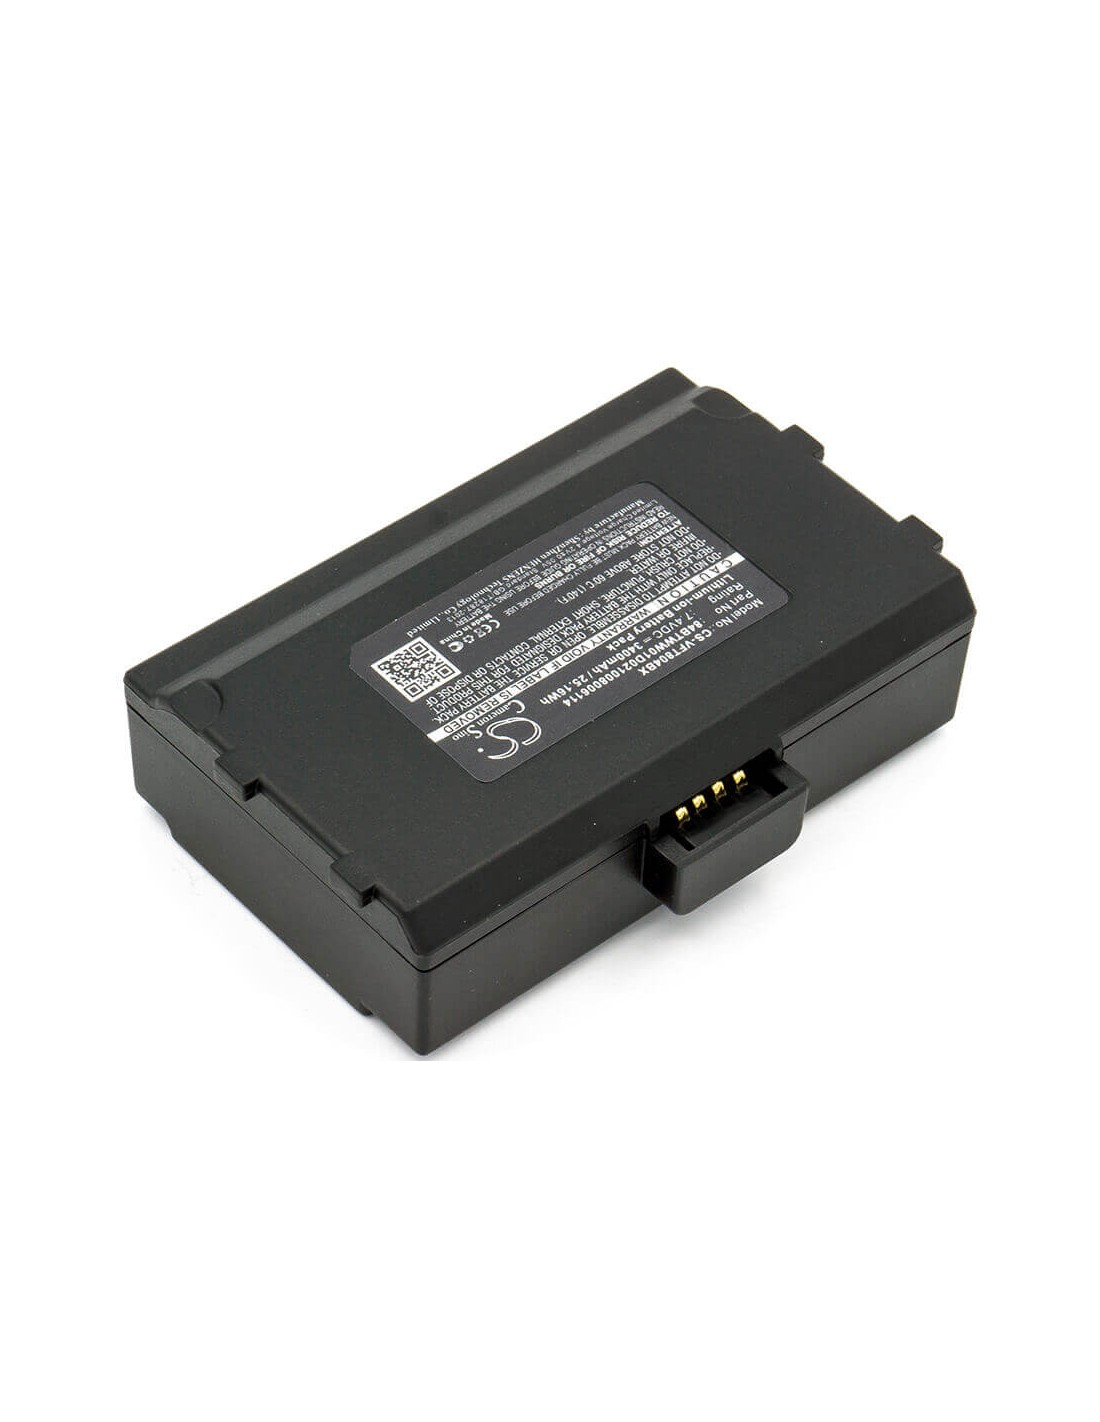 Battery for Verifone, Nurit 8040, Nurit 8400, Nurit 8400 Pci Compliant 7.4V, 3400mAh - 25.16Wh